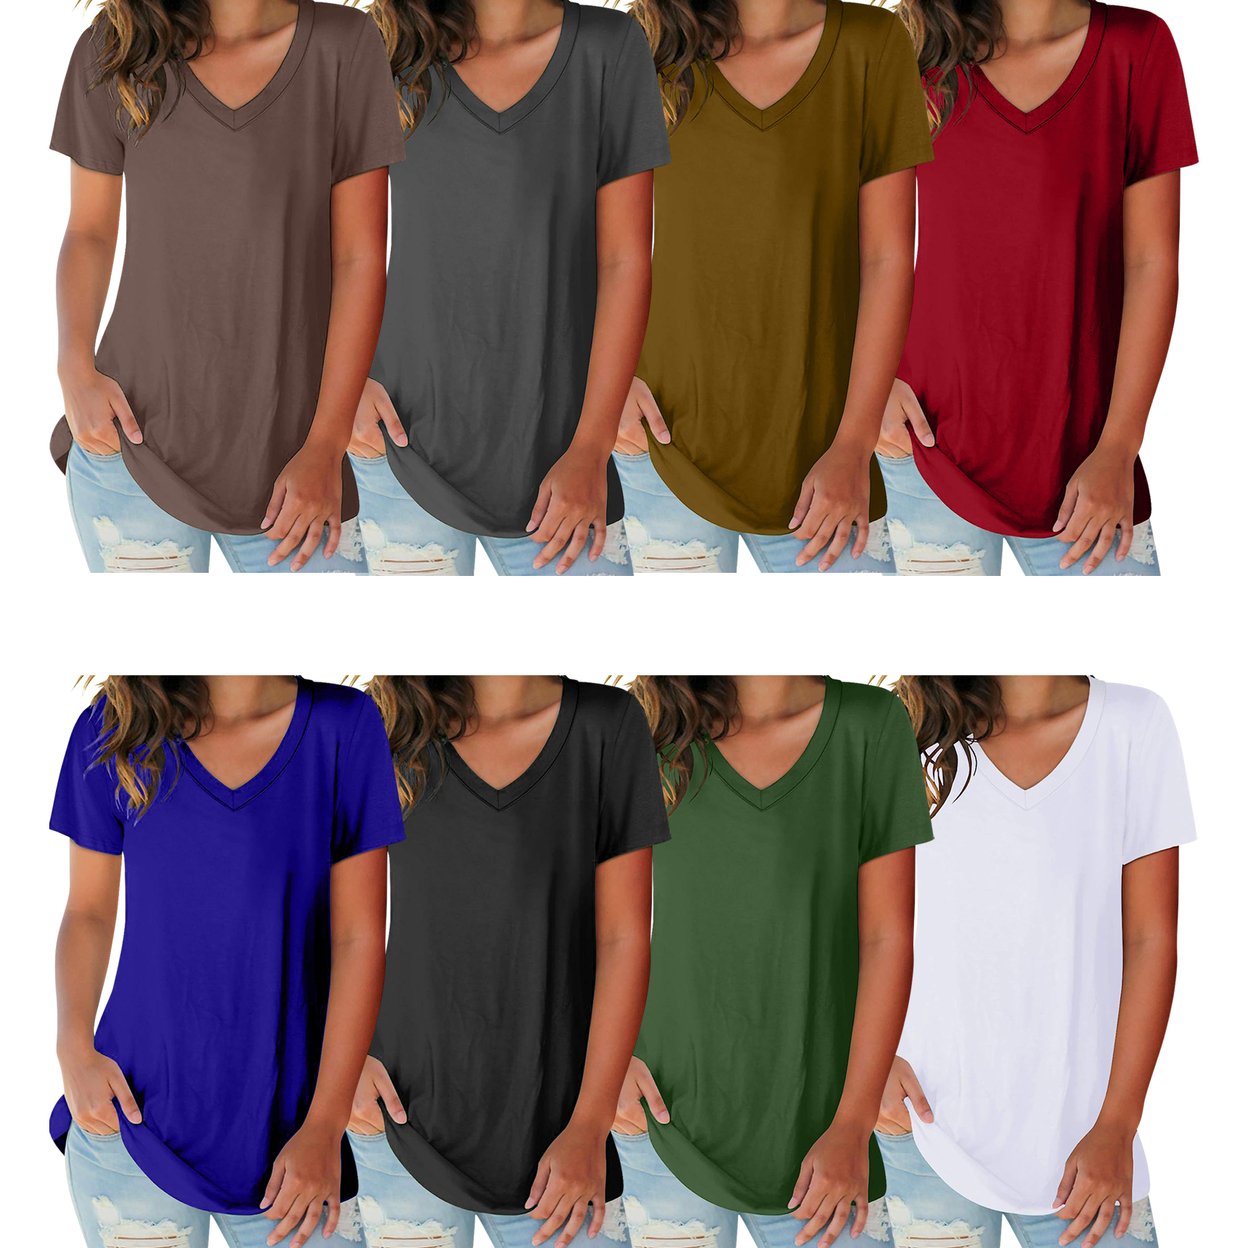 2-Pack: Women's Ultra Soft Smooth Cotton Blend Basic V-Neck Short Sleeve Shirts - Black & Brown, Large